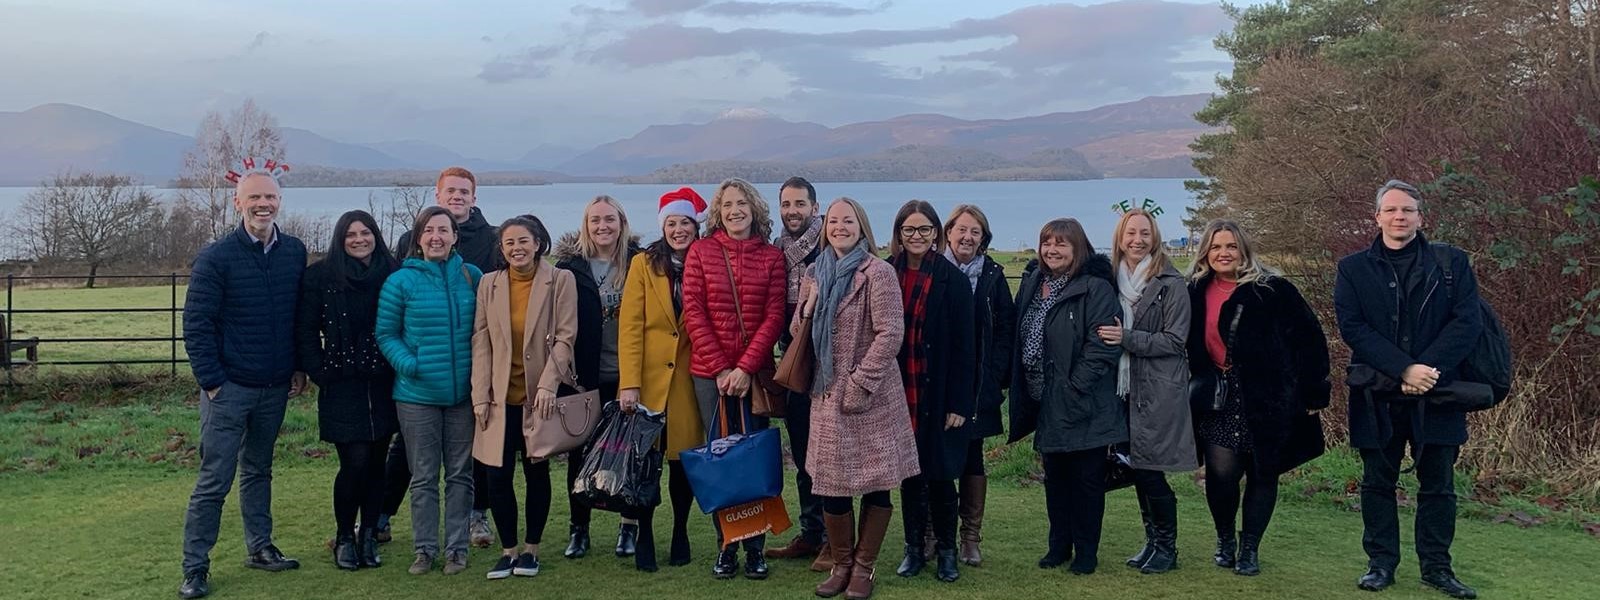 C&E team visit Ross Priory on the banks of Loch Lomond